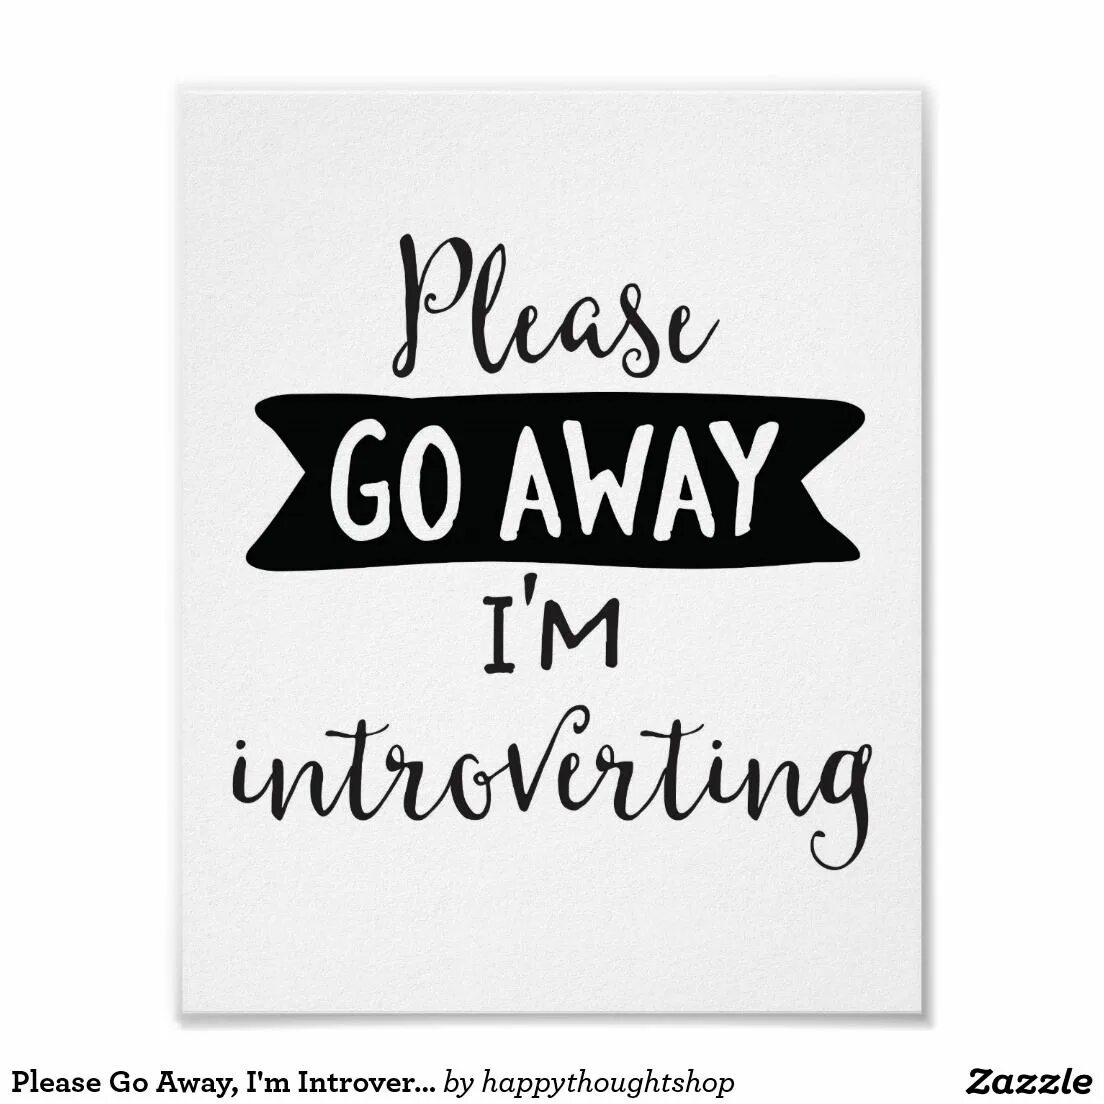 Go away i'm Introverting. Топ i'm Introvert. Please go away с фоном. I'M Introvert надпись. Making go away